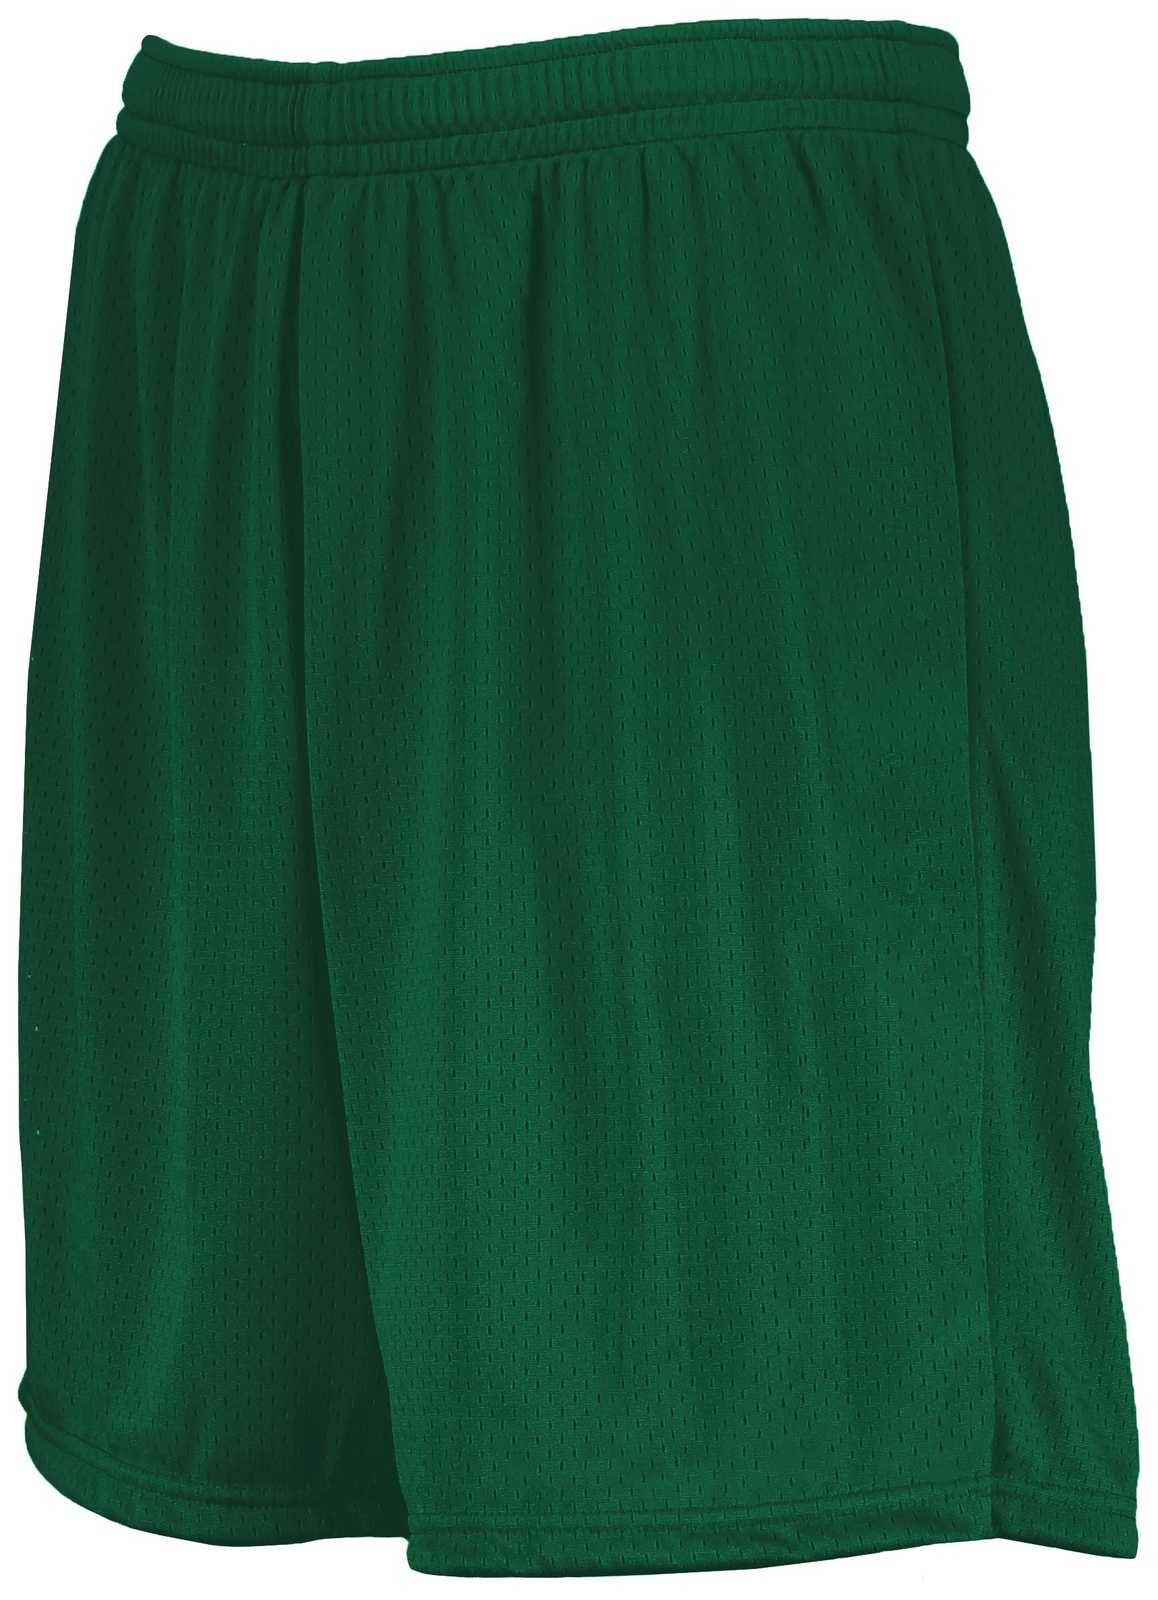 Augusta 1850 7-Inch Modified Mesh Shorts - Dark Green - HIT a Double